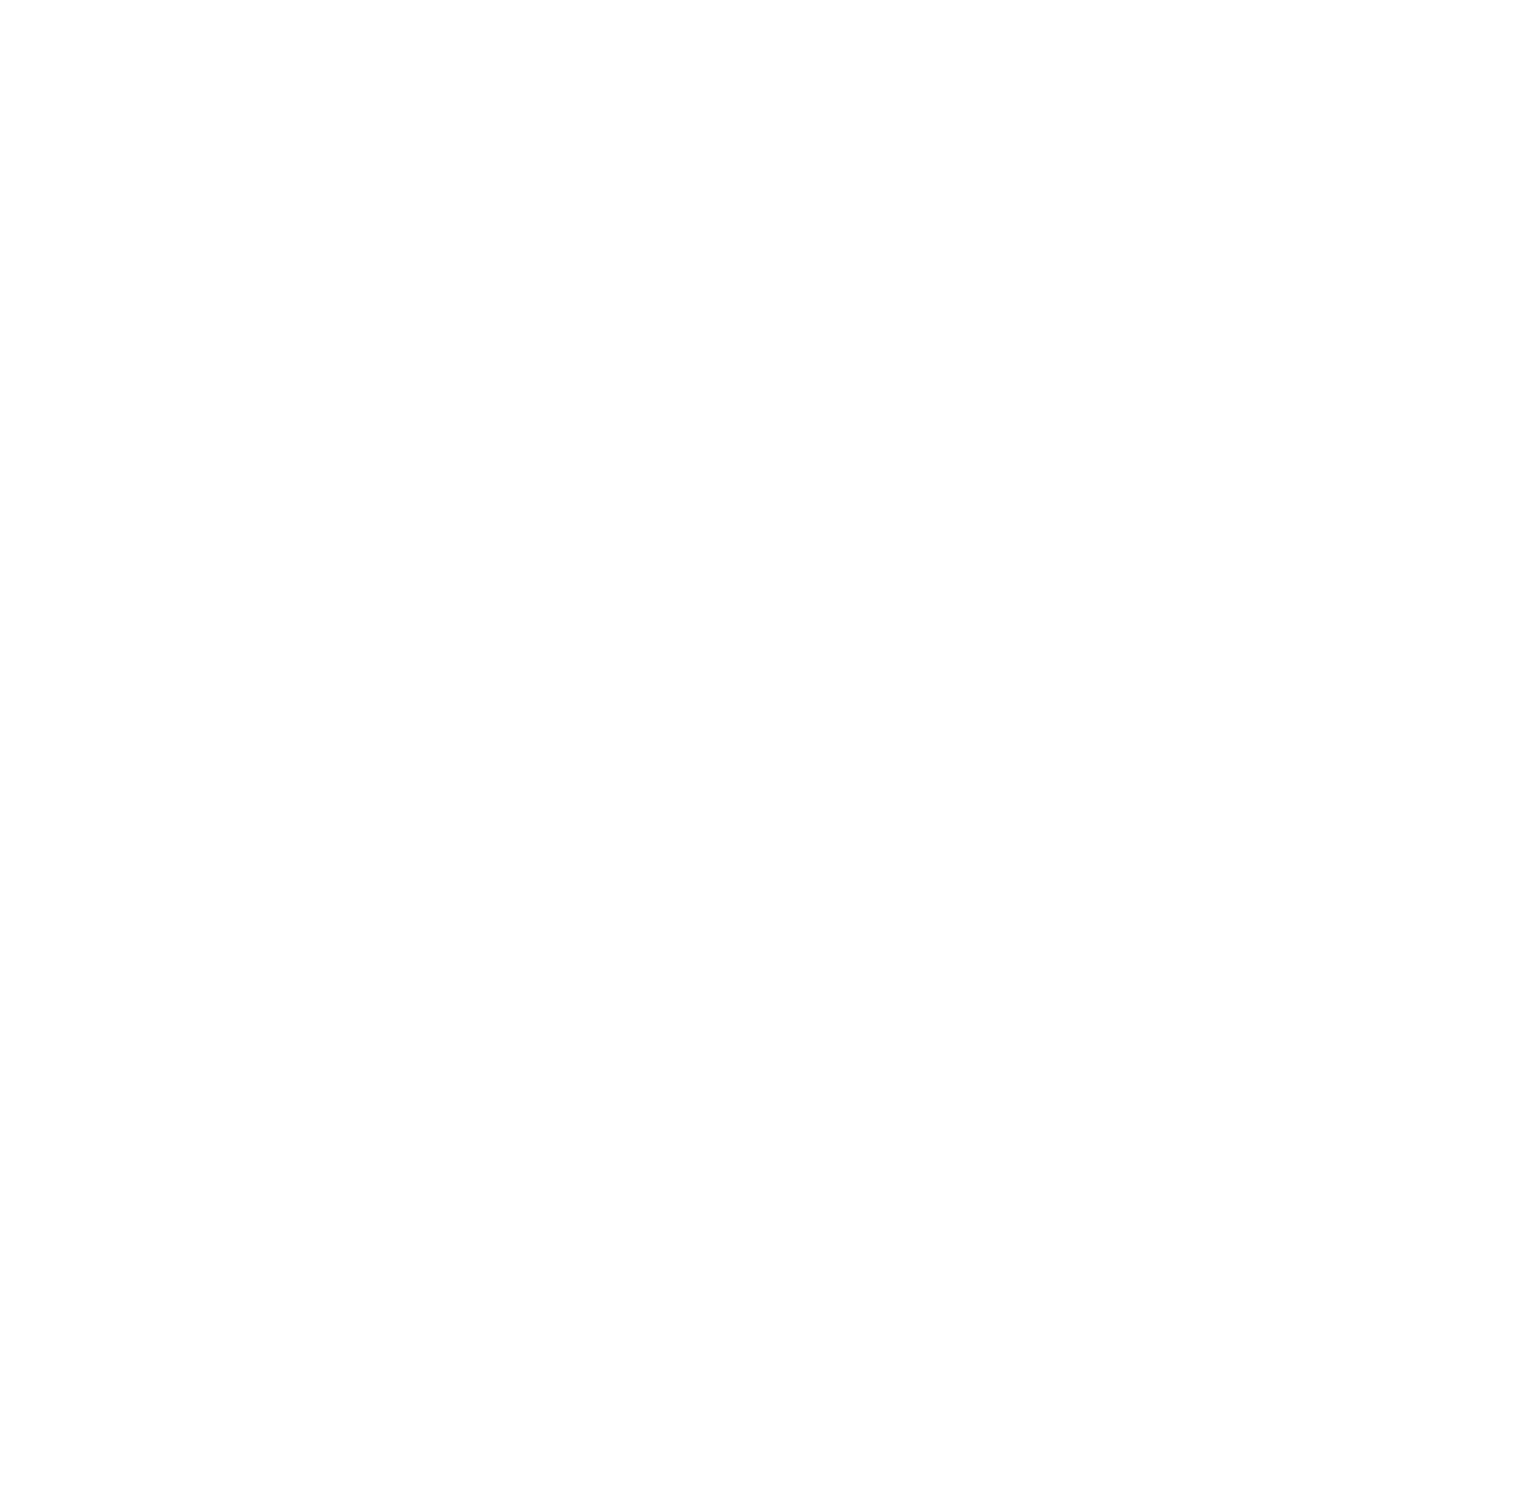 Finning logo pour fonds sombres (PNG transparent)